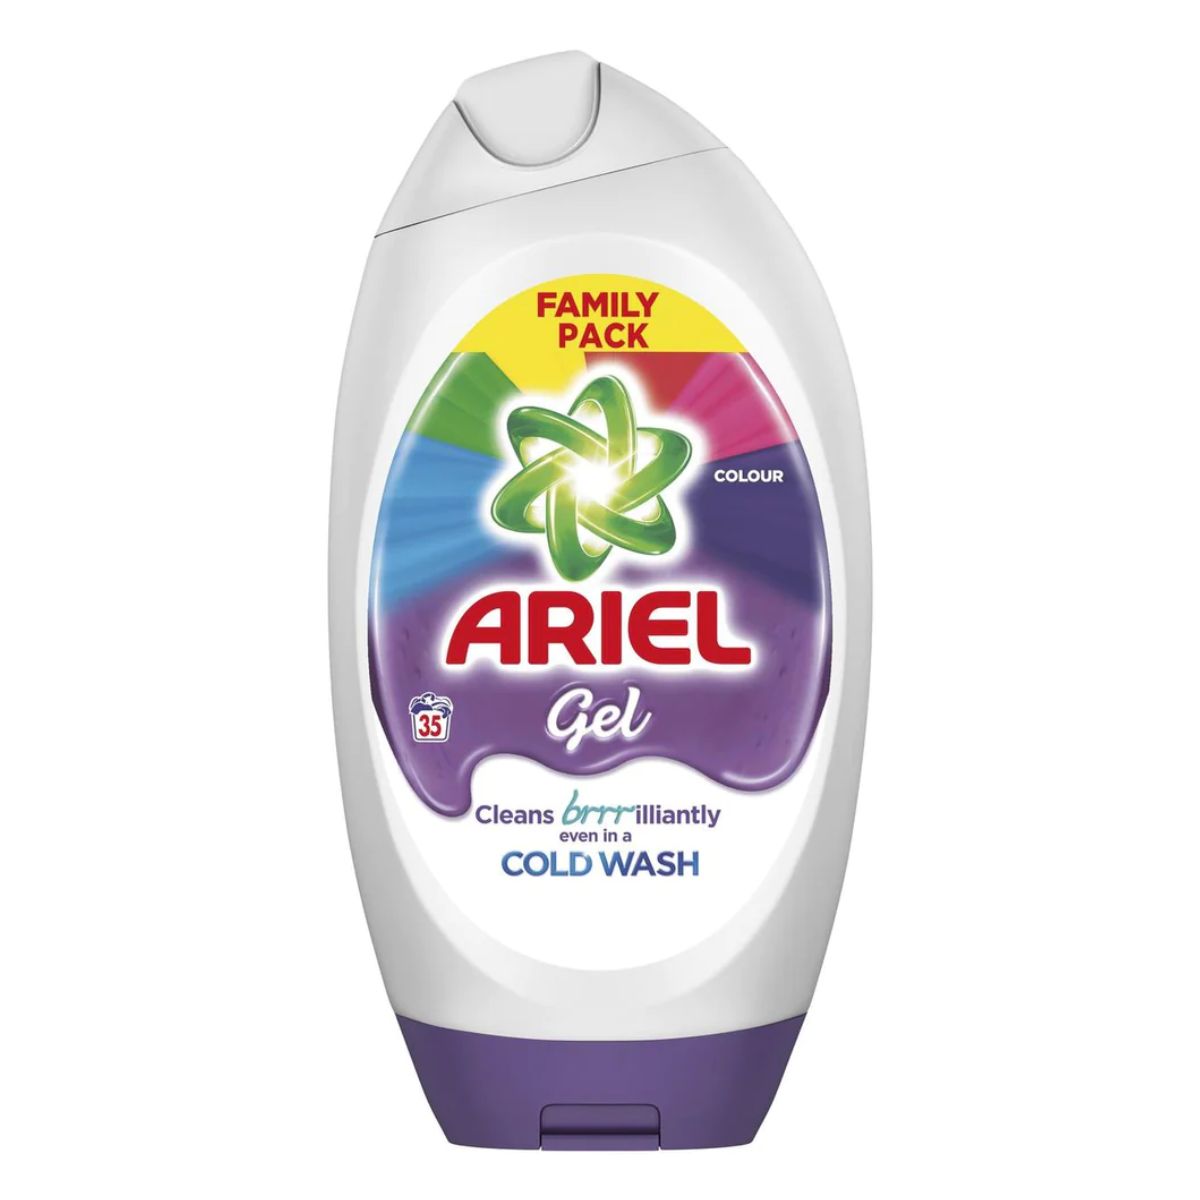 Ariel - Colour Washing Liquid Gel - 35 Washes - 250ml.